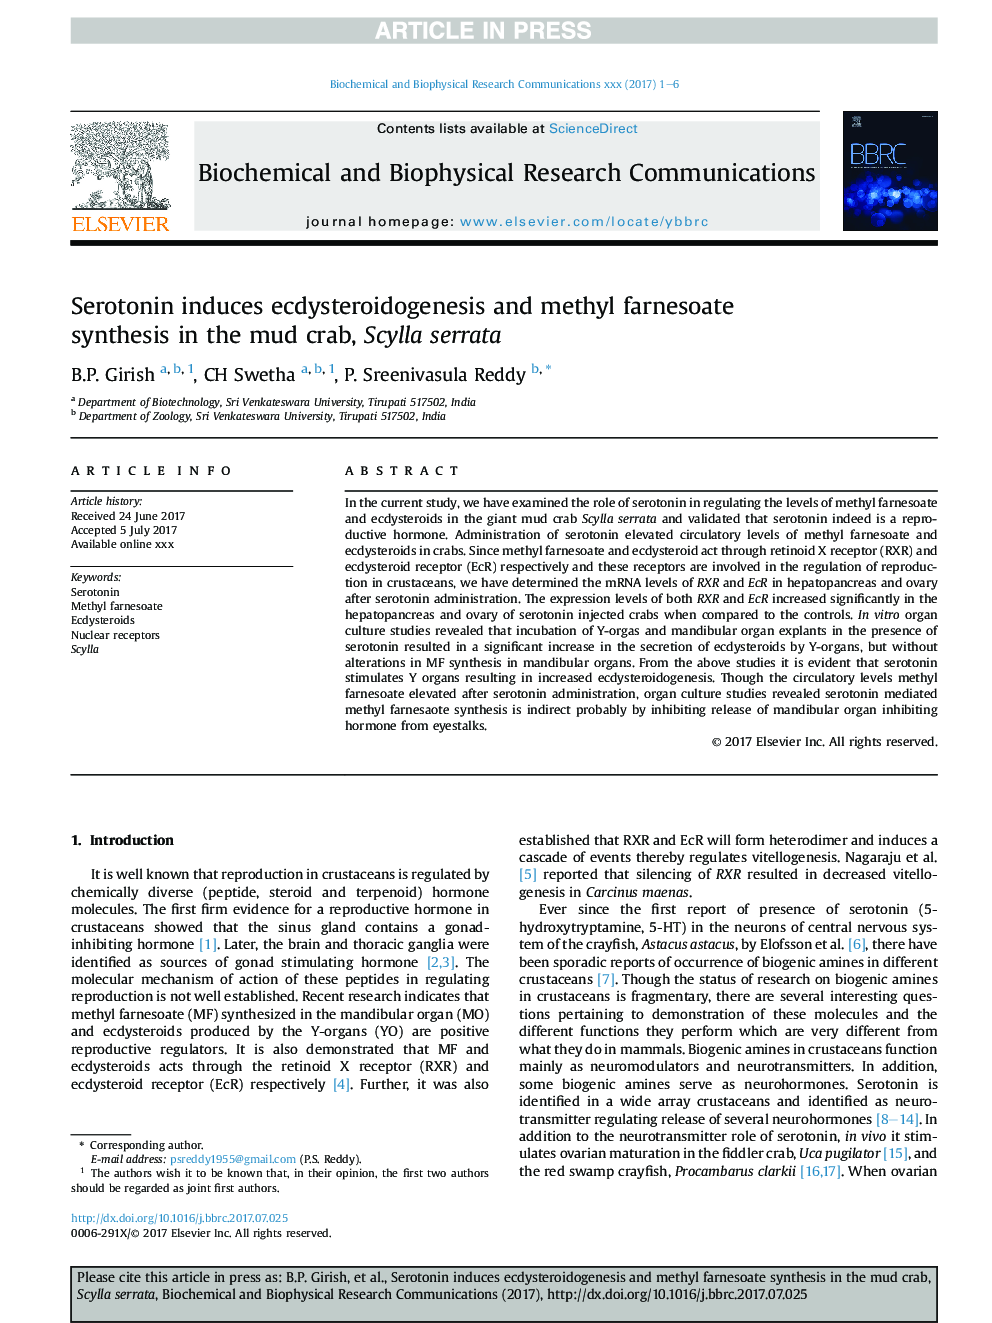 Serotonin induces ecdysteroidogenesis and methyl farnesoate synthesis in the mud crab, Scylla serrata